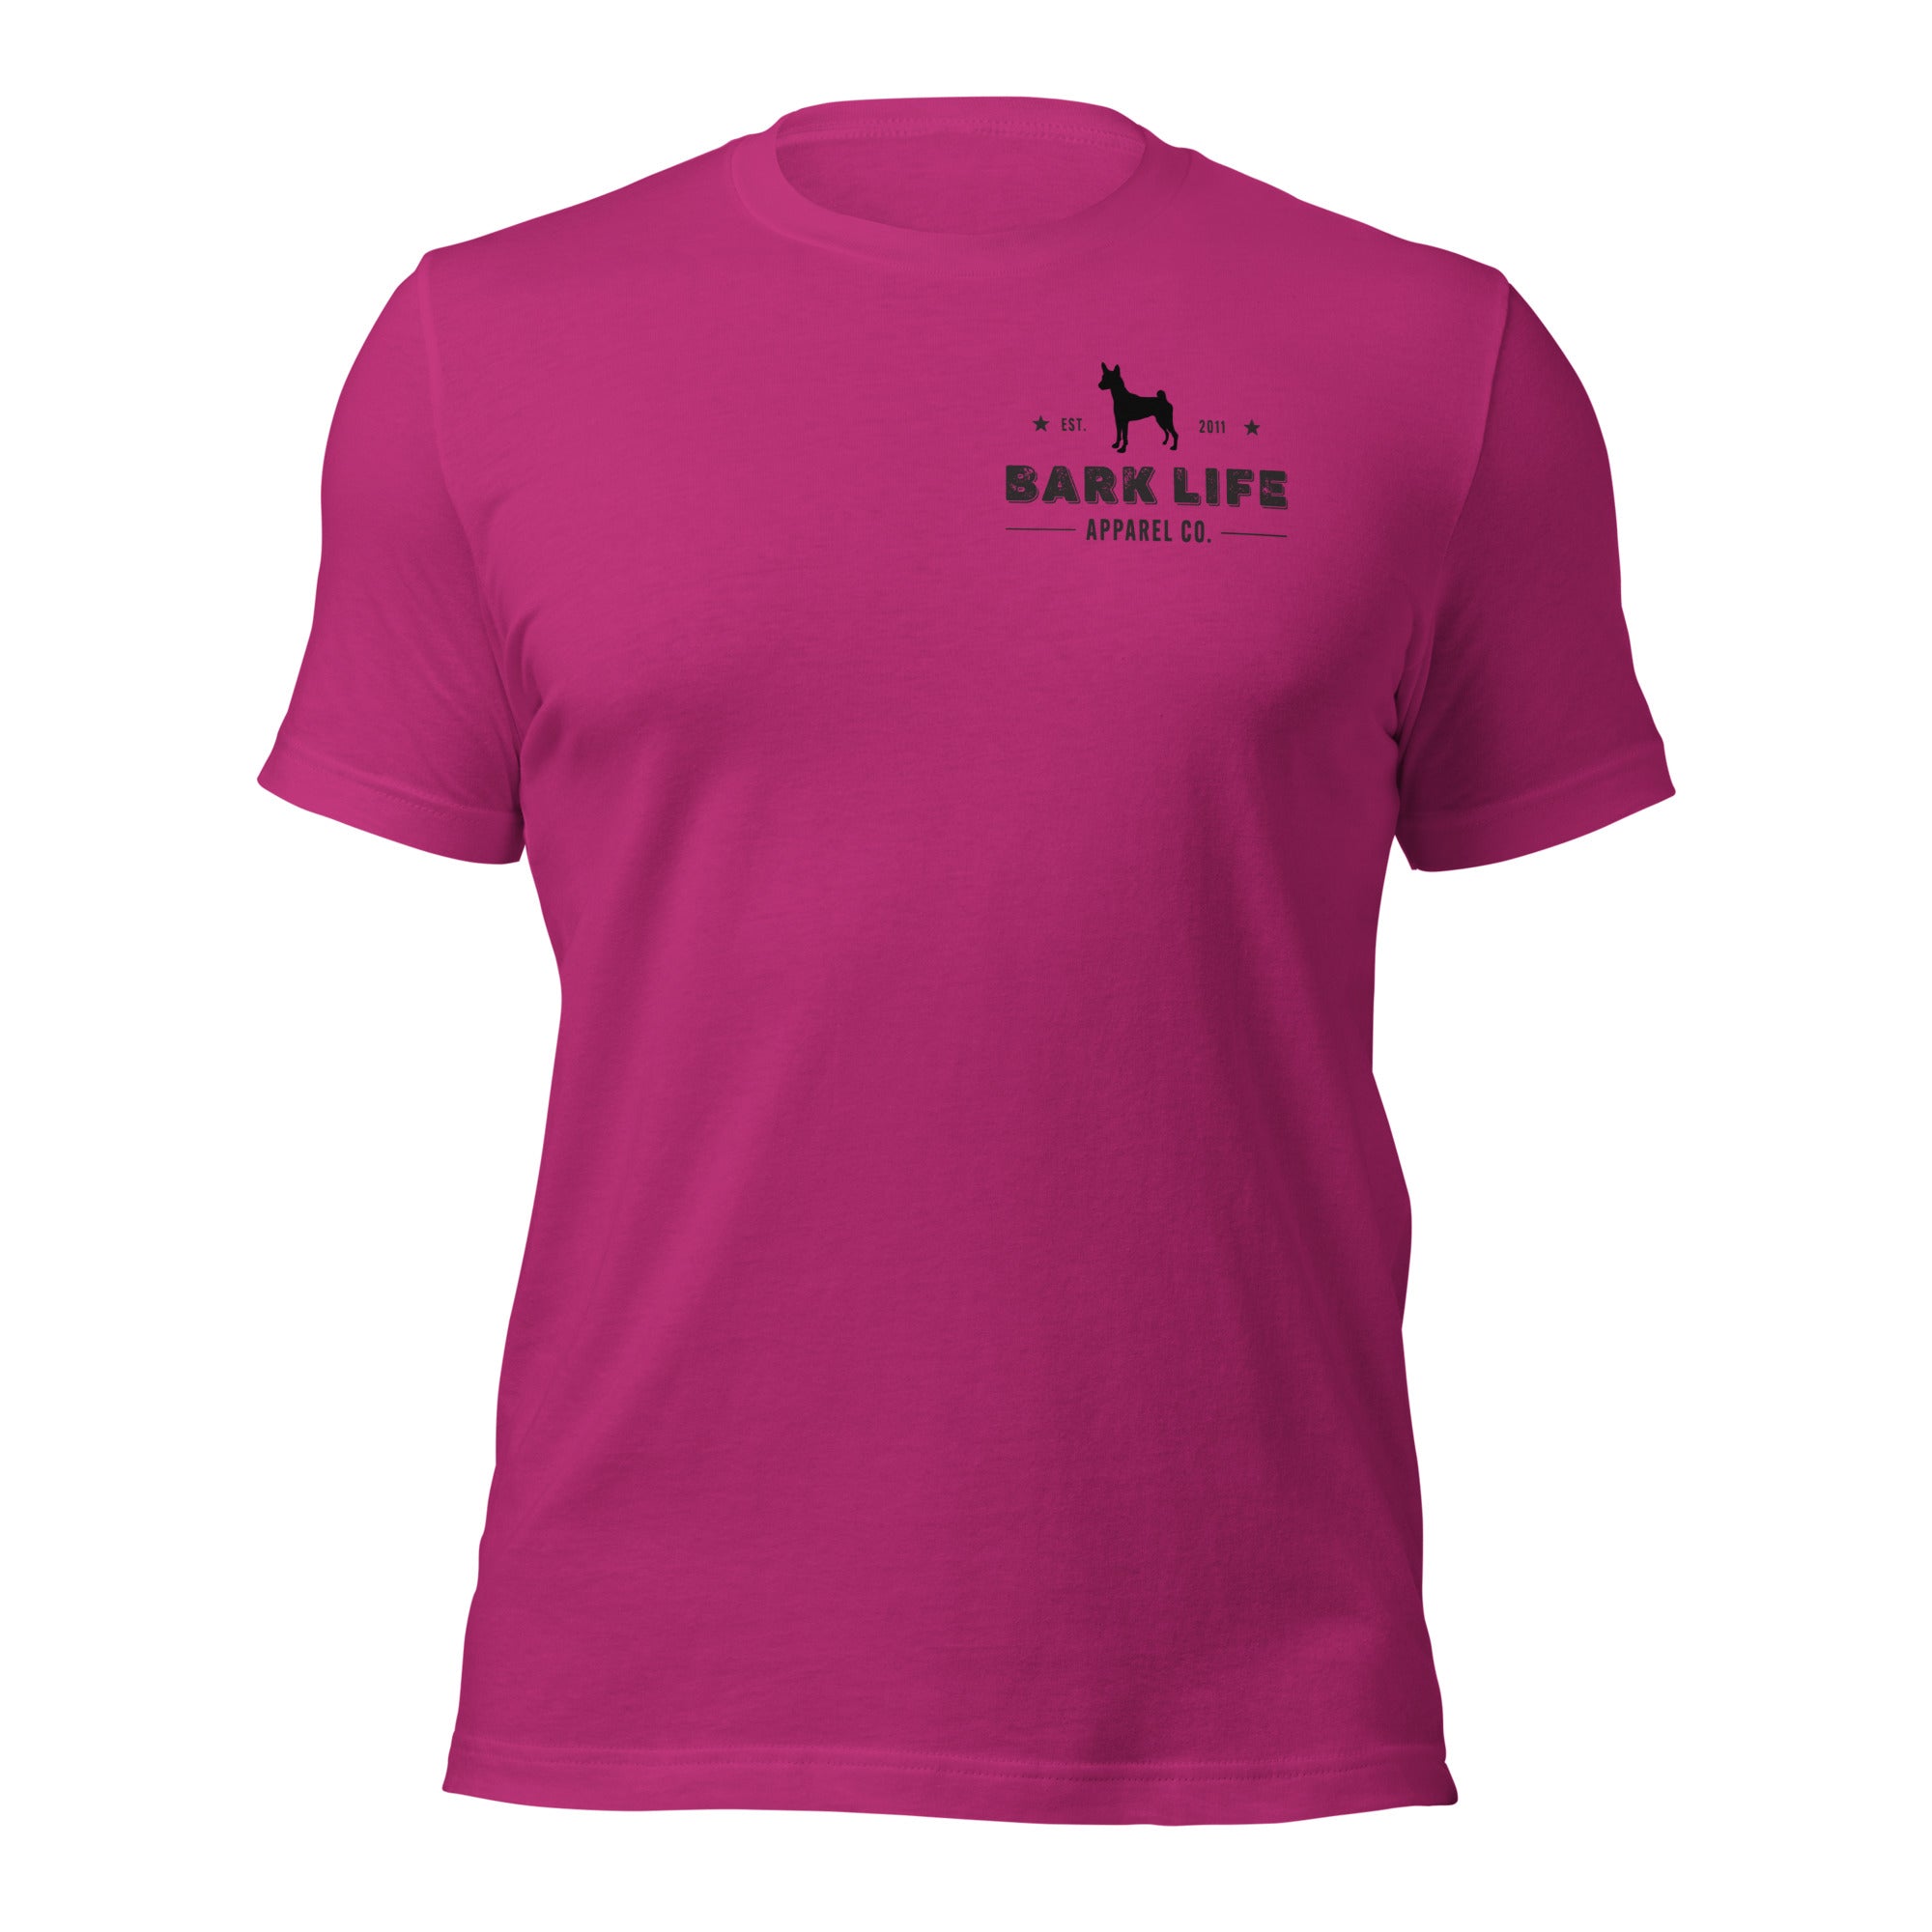 Basenji - Short Sleeve Cotton Tee  Shirt